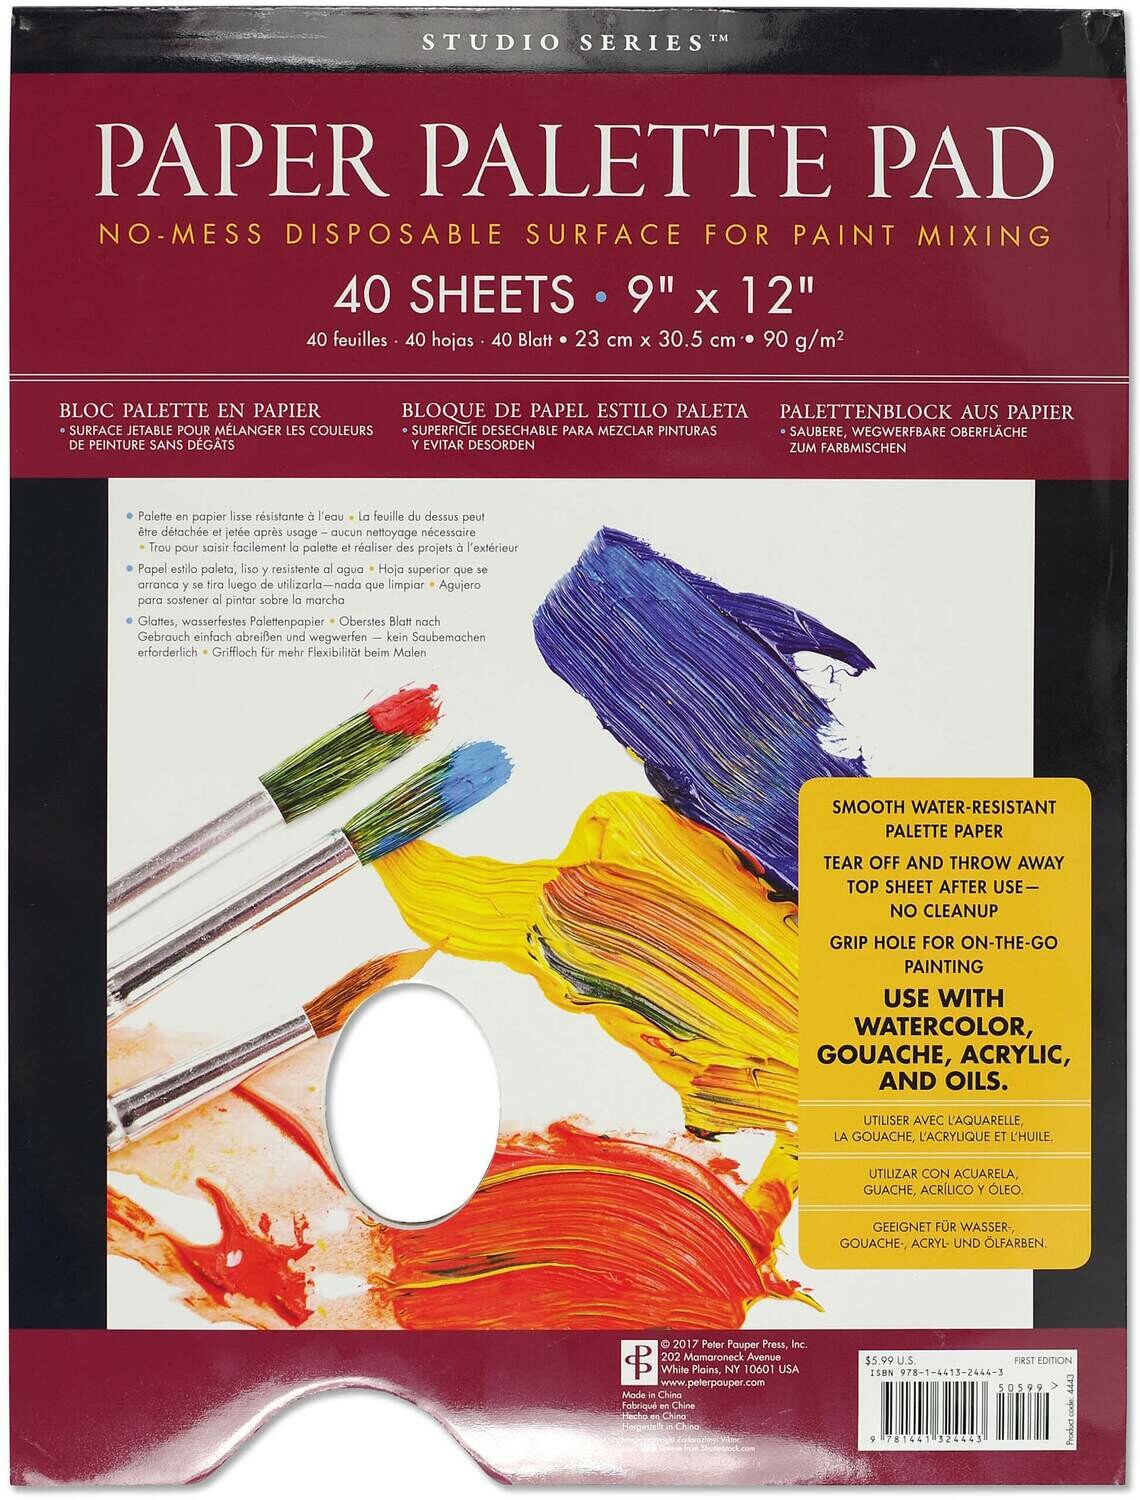 PPP Studio Series Paper Palette Pad